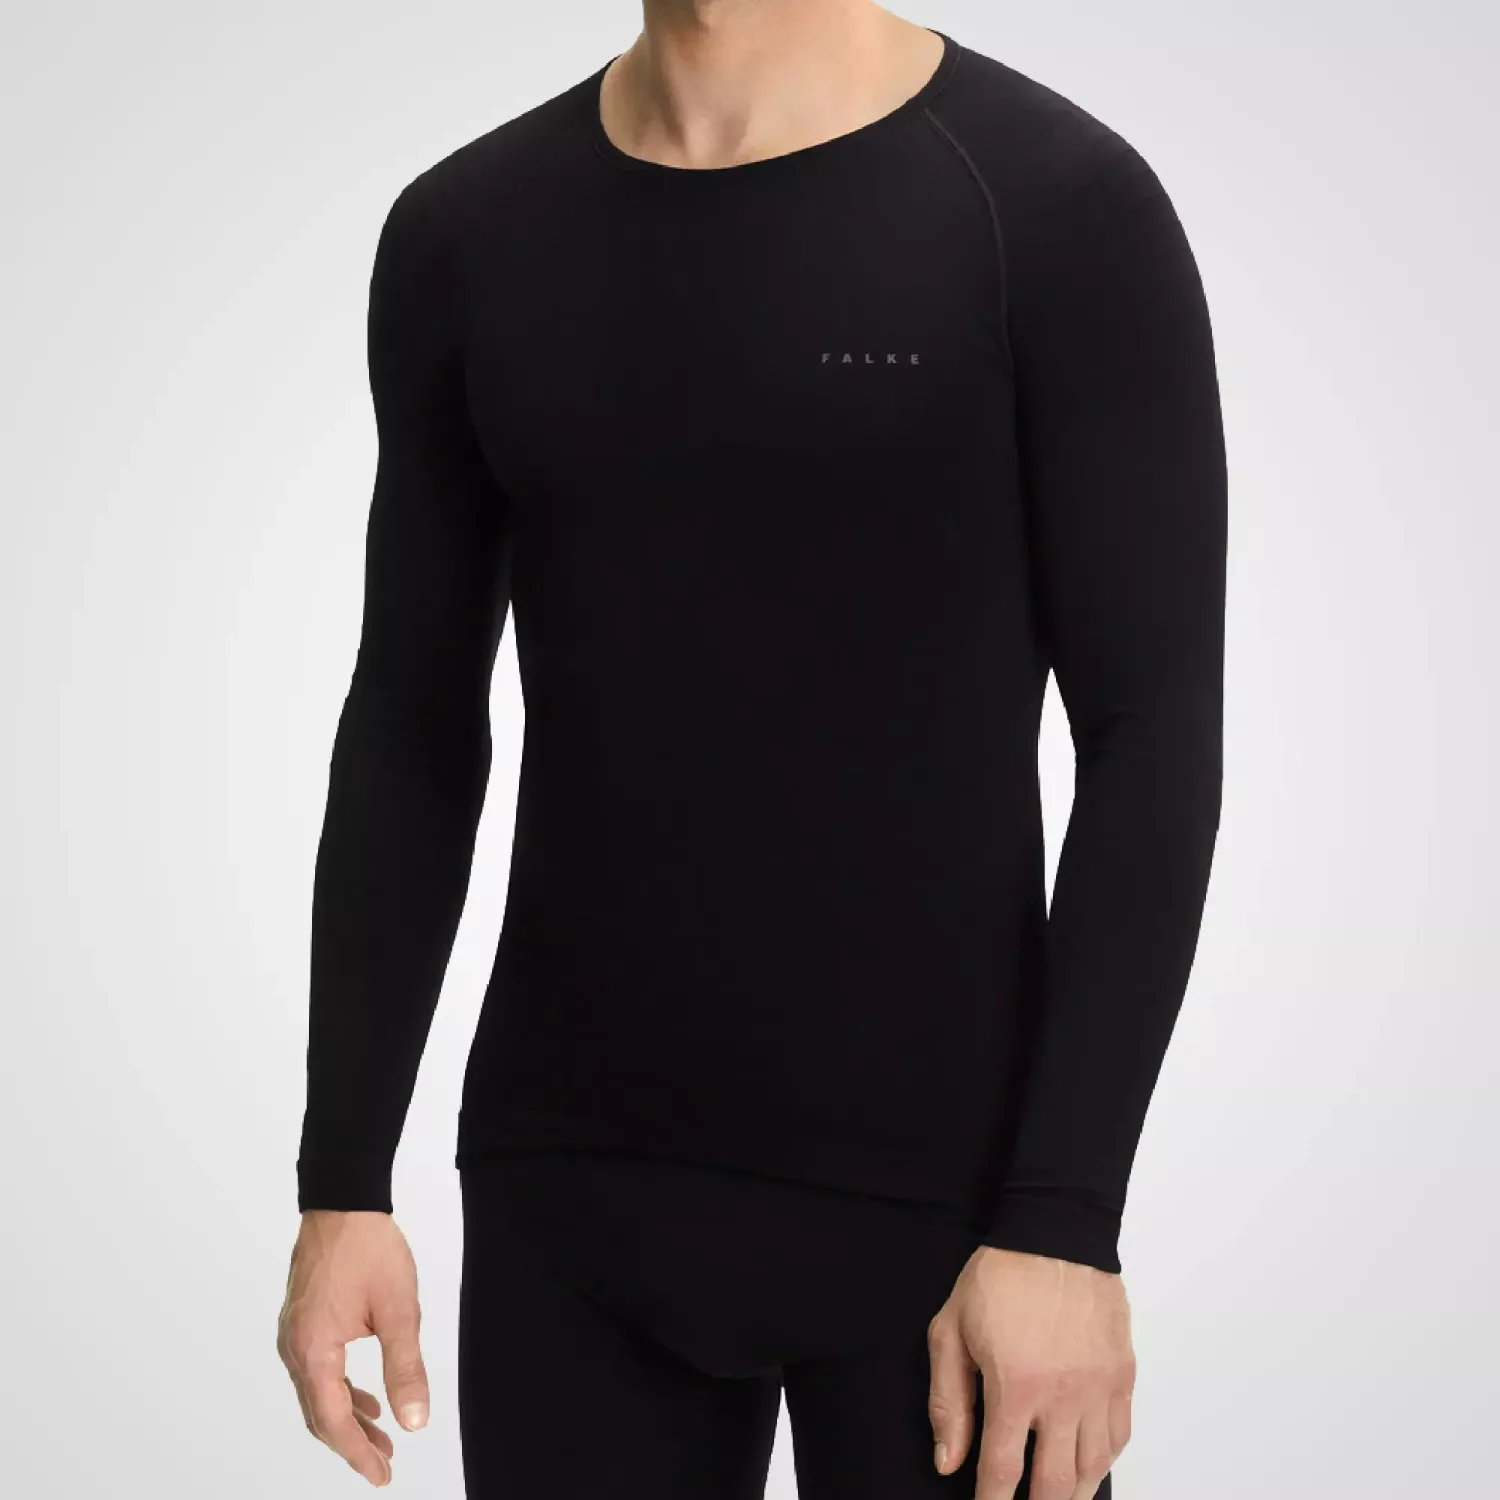 Falke - Warm Longsleeved Shirt Tight Men - Black M